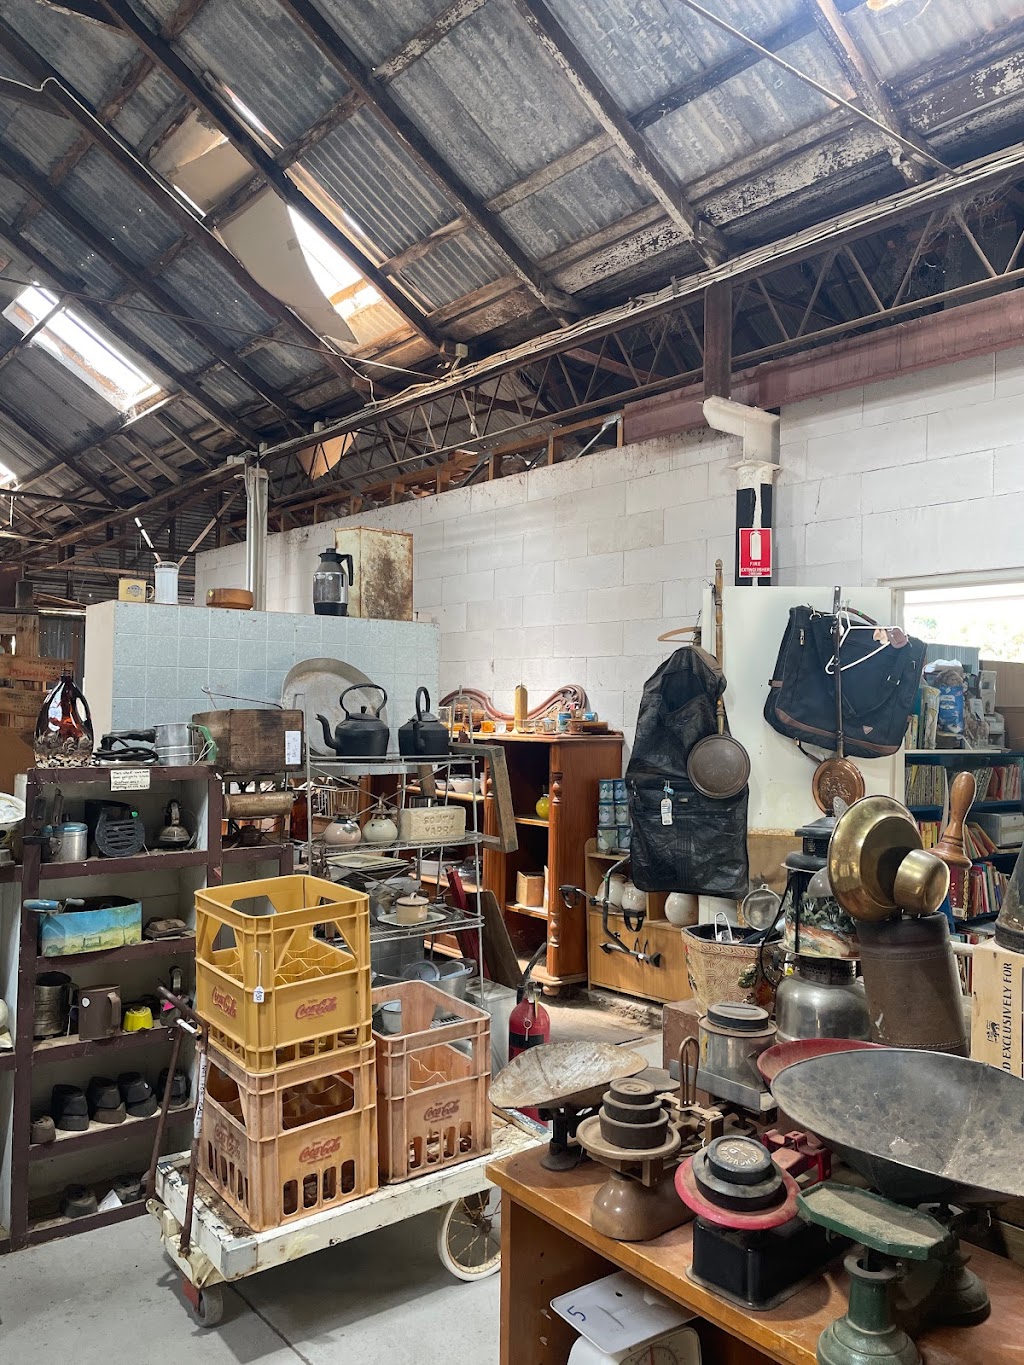 Murphys Vintage Wares | store | 13 Jacaranda St, Red Cliffs VIC 3496, Australia | 0447045114 OR +61 447 045 114